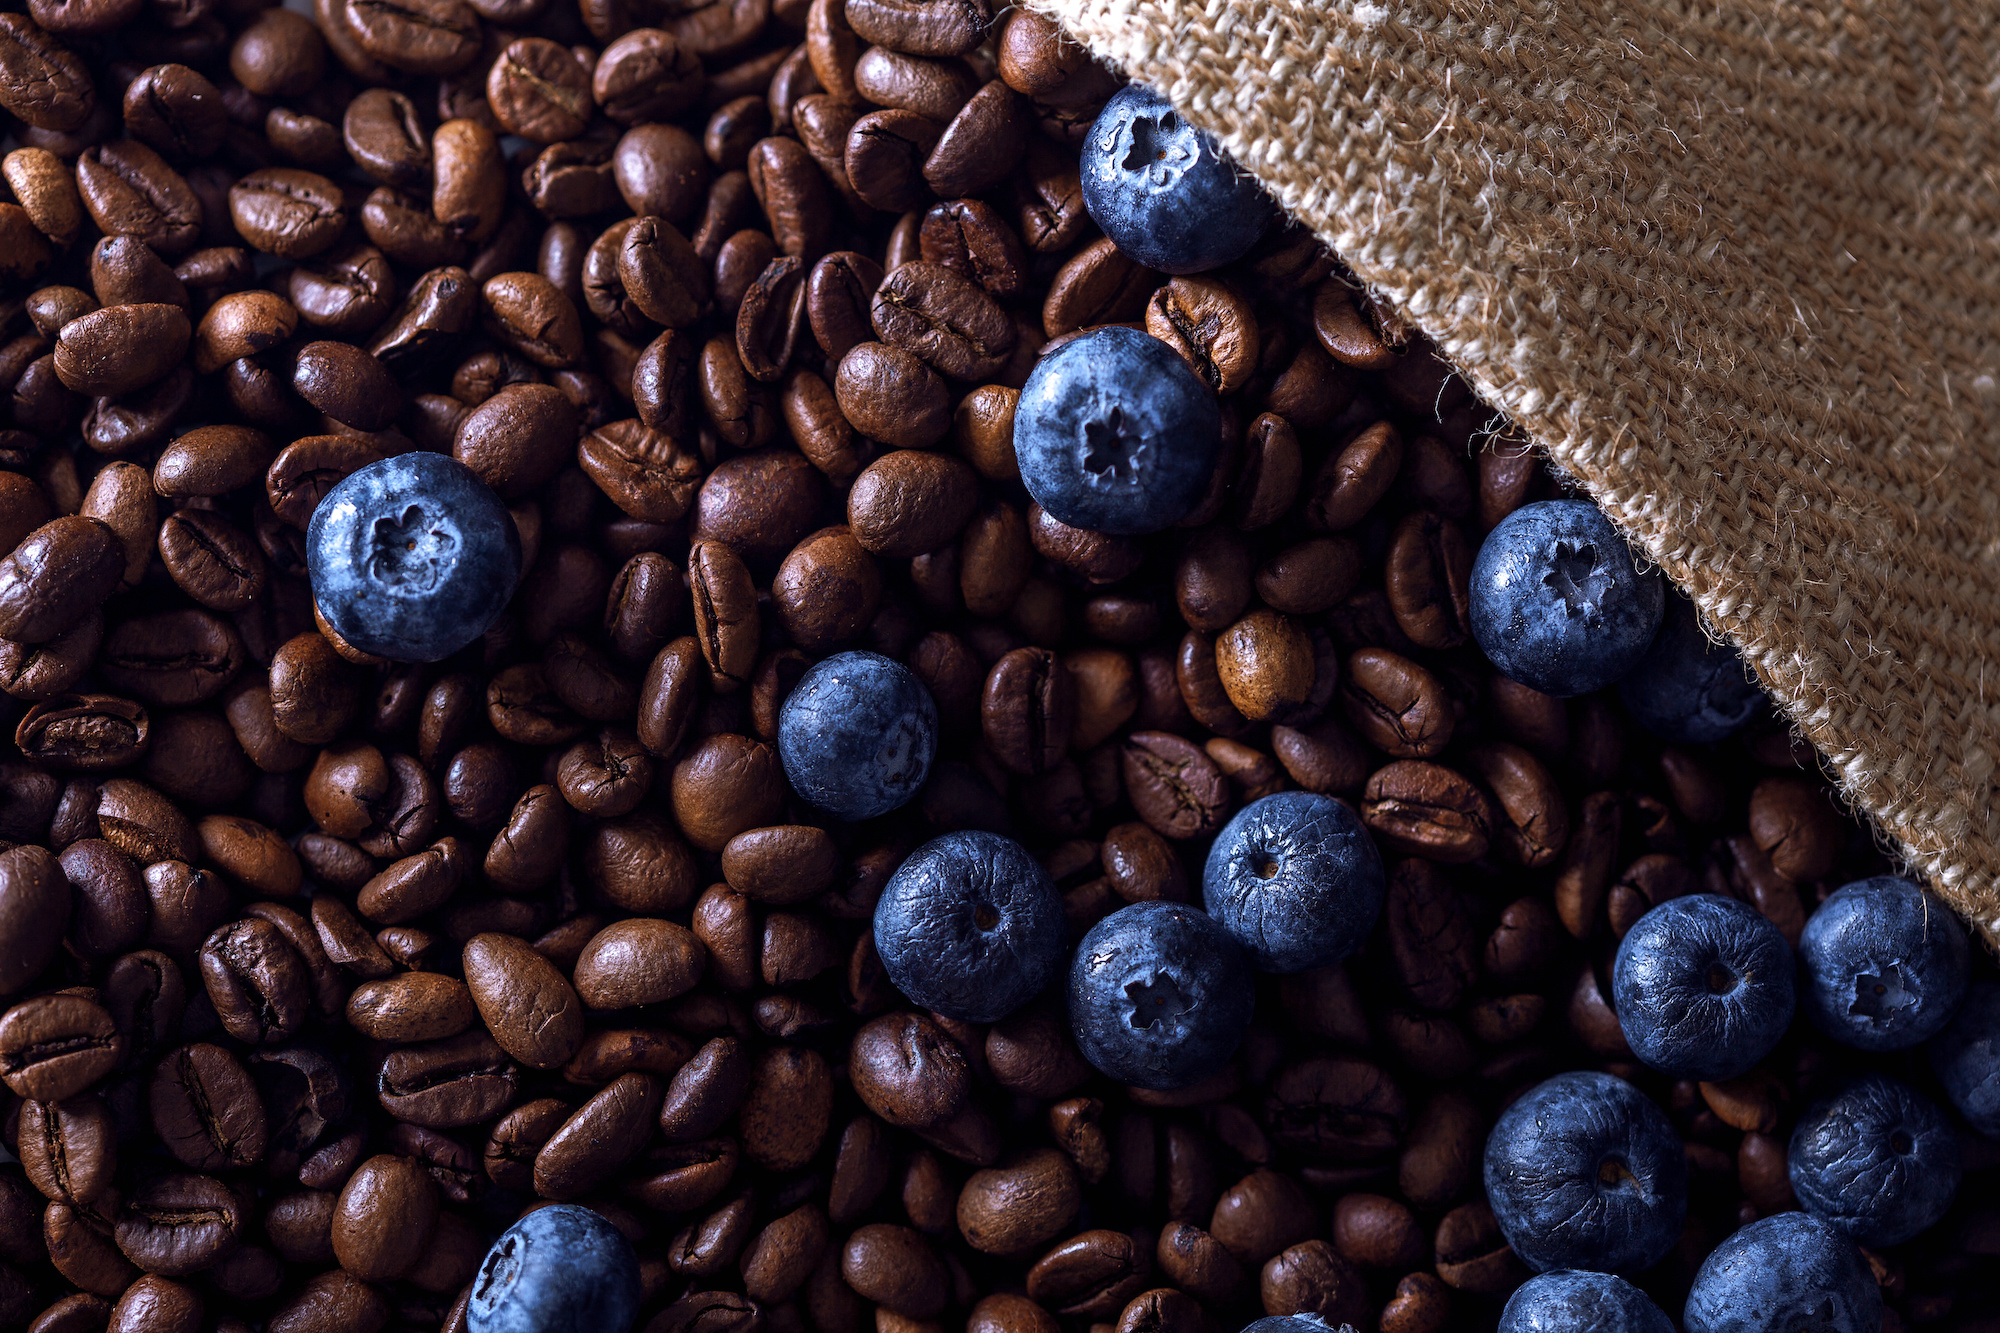 Antioxidants In Coffee vs Blueberries